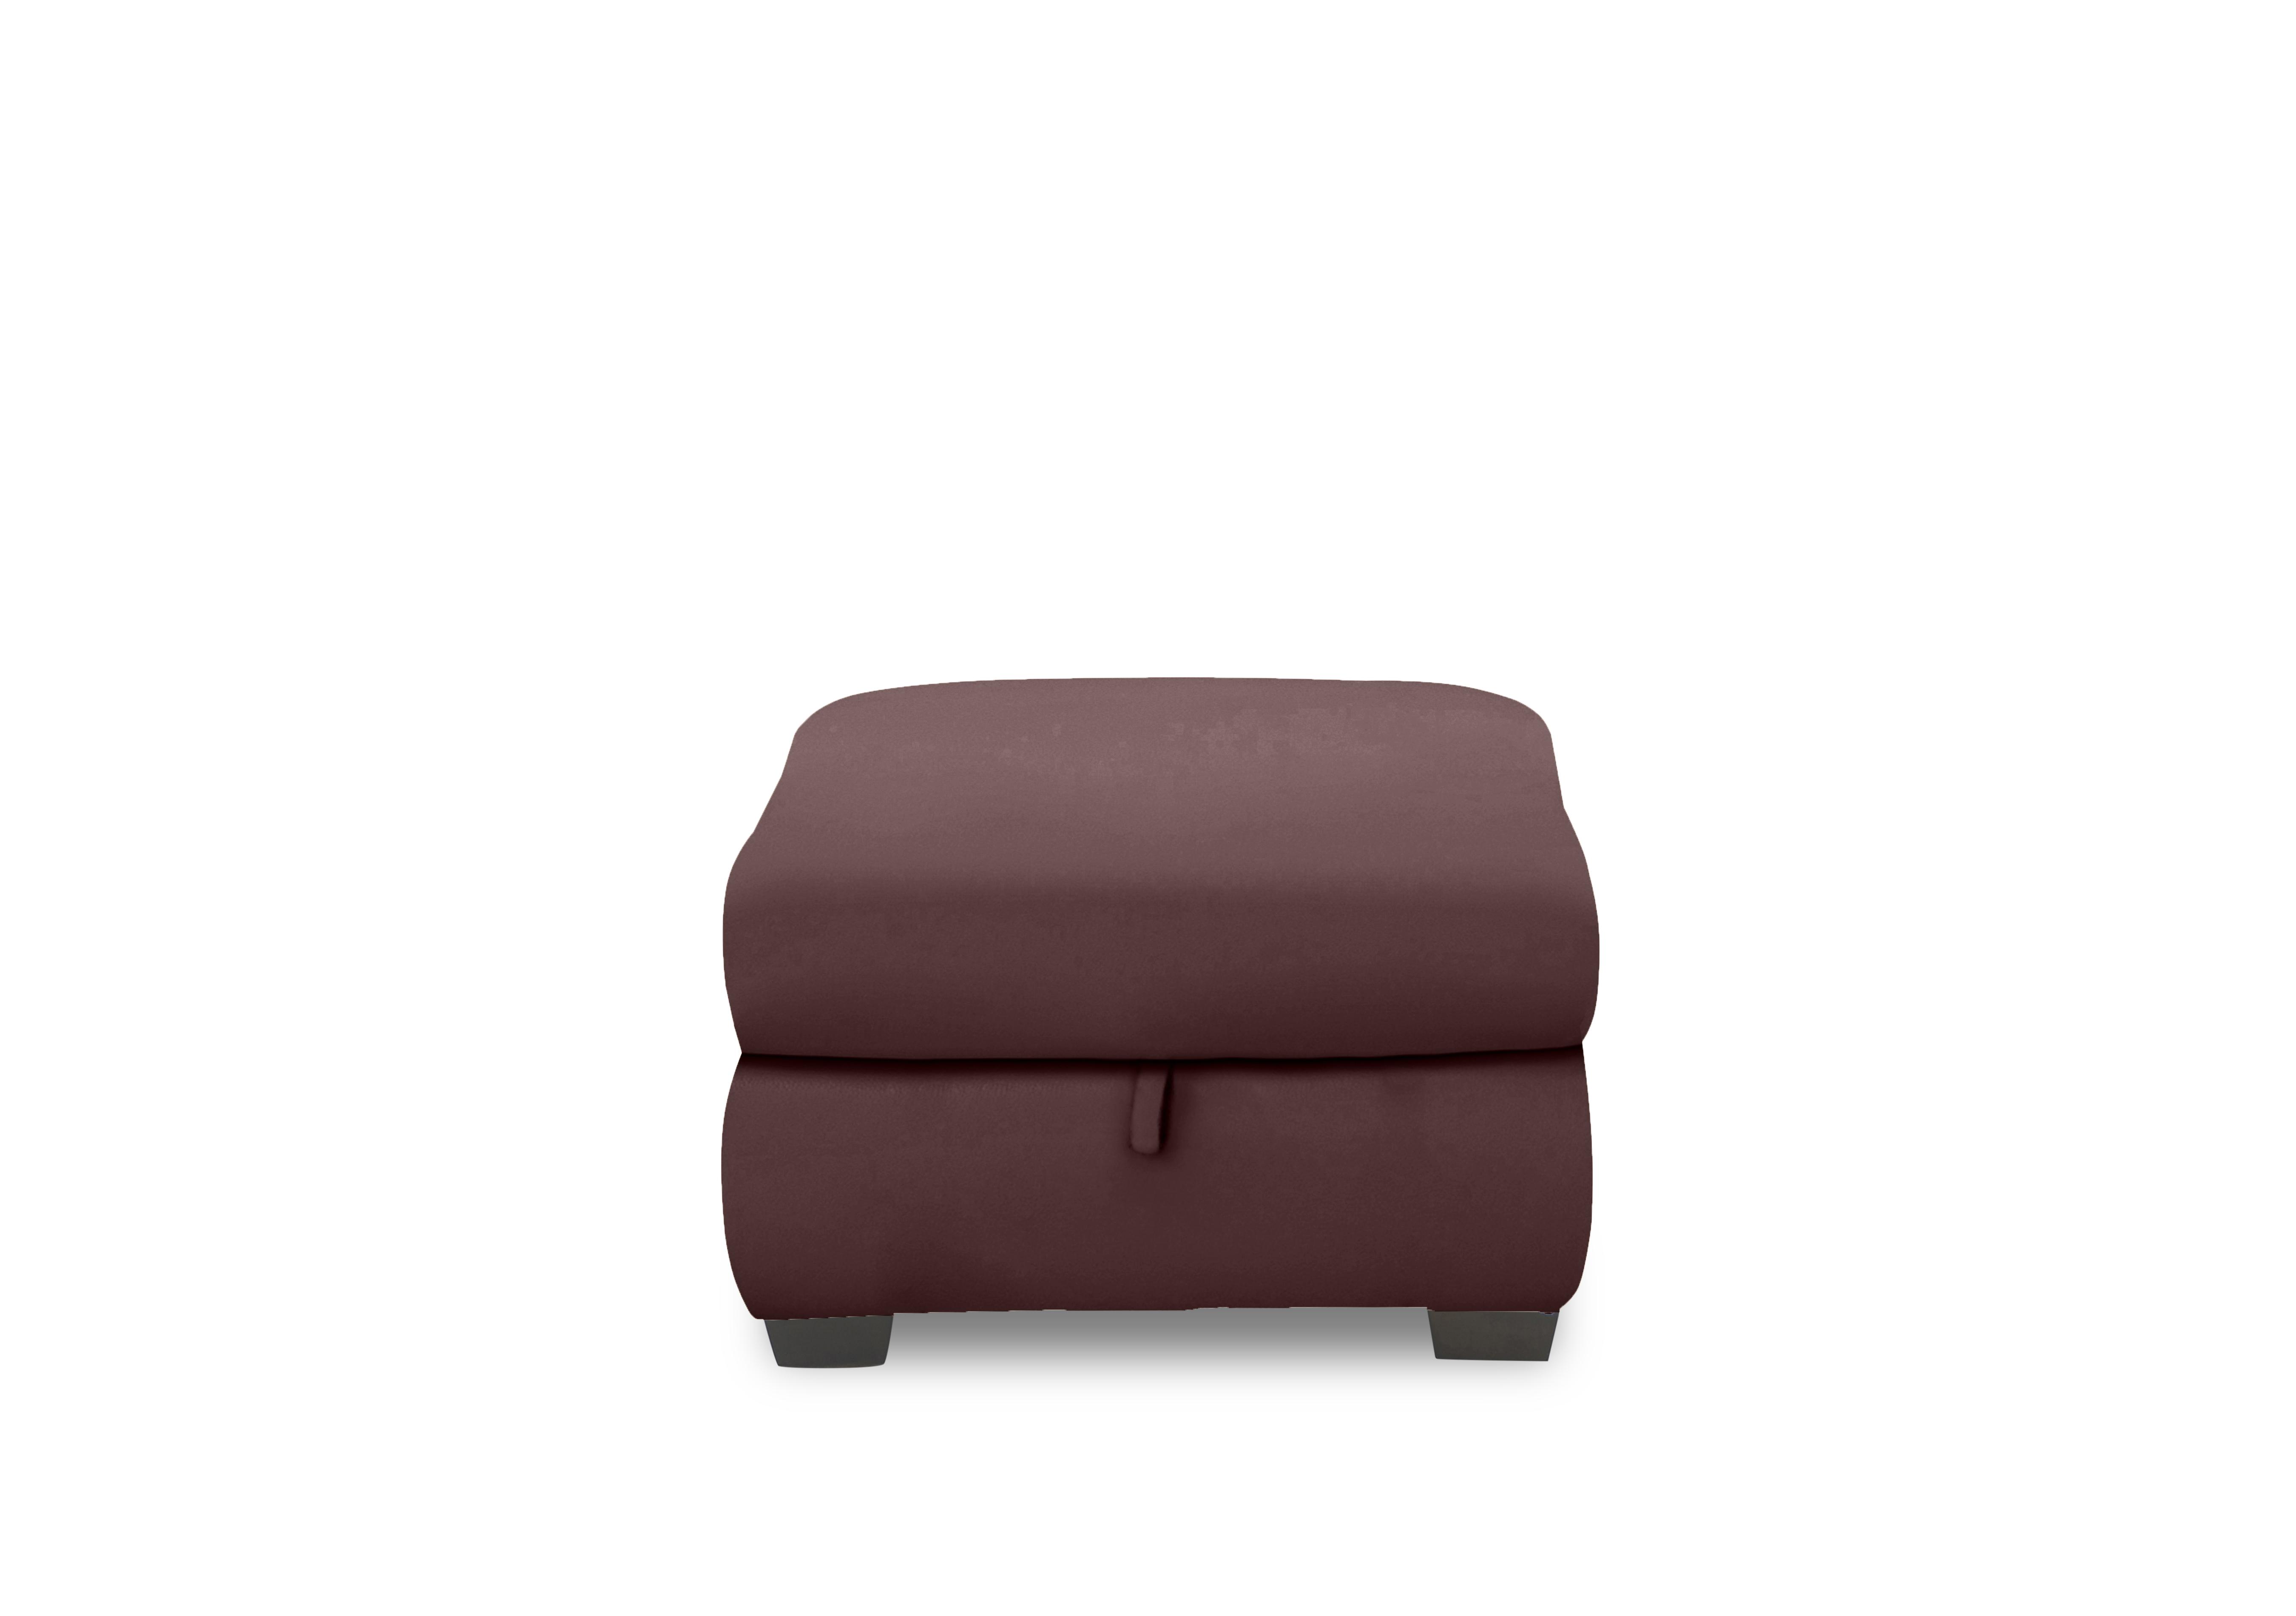 Nixon Leather Storage Footstool in An-751b Burgundy on Furniture Village